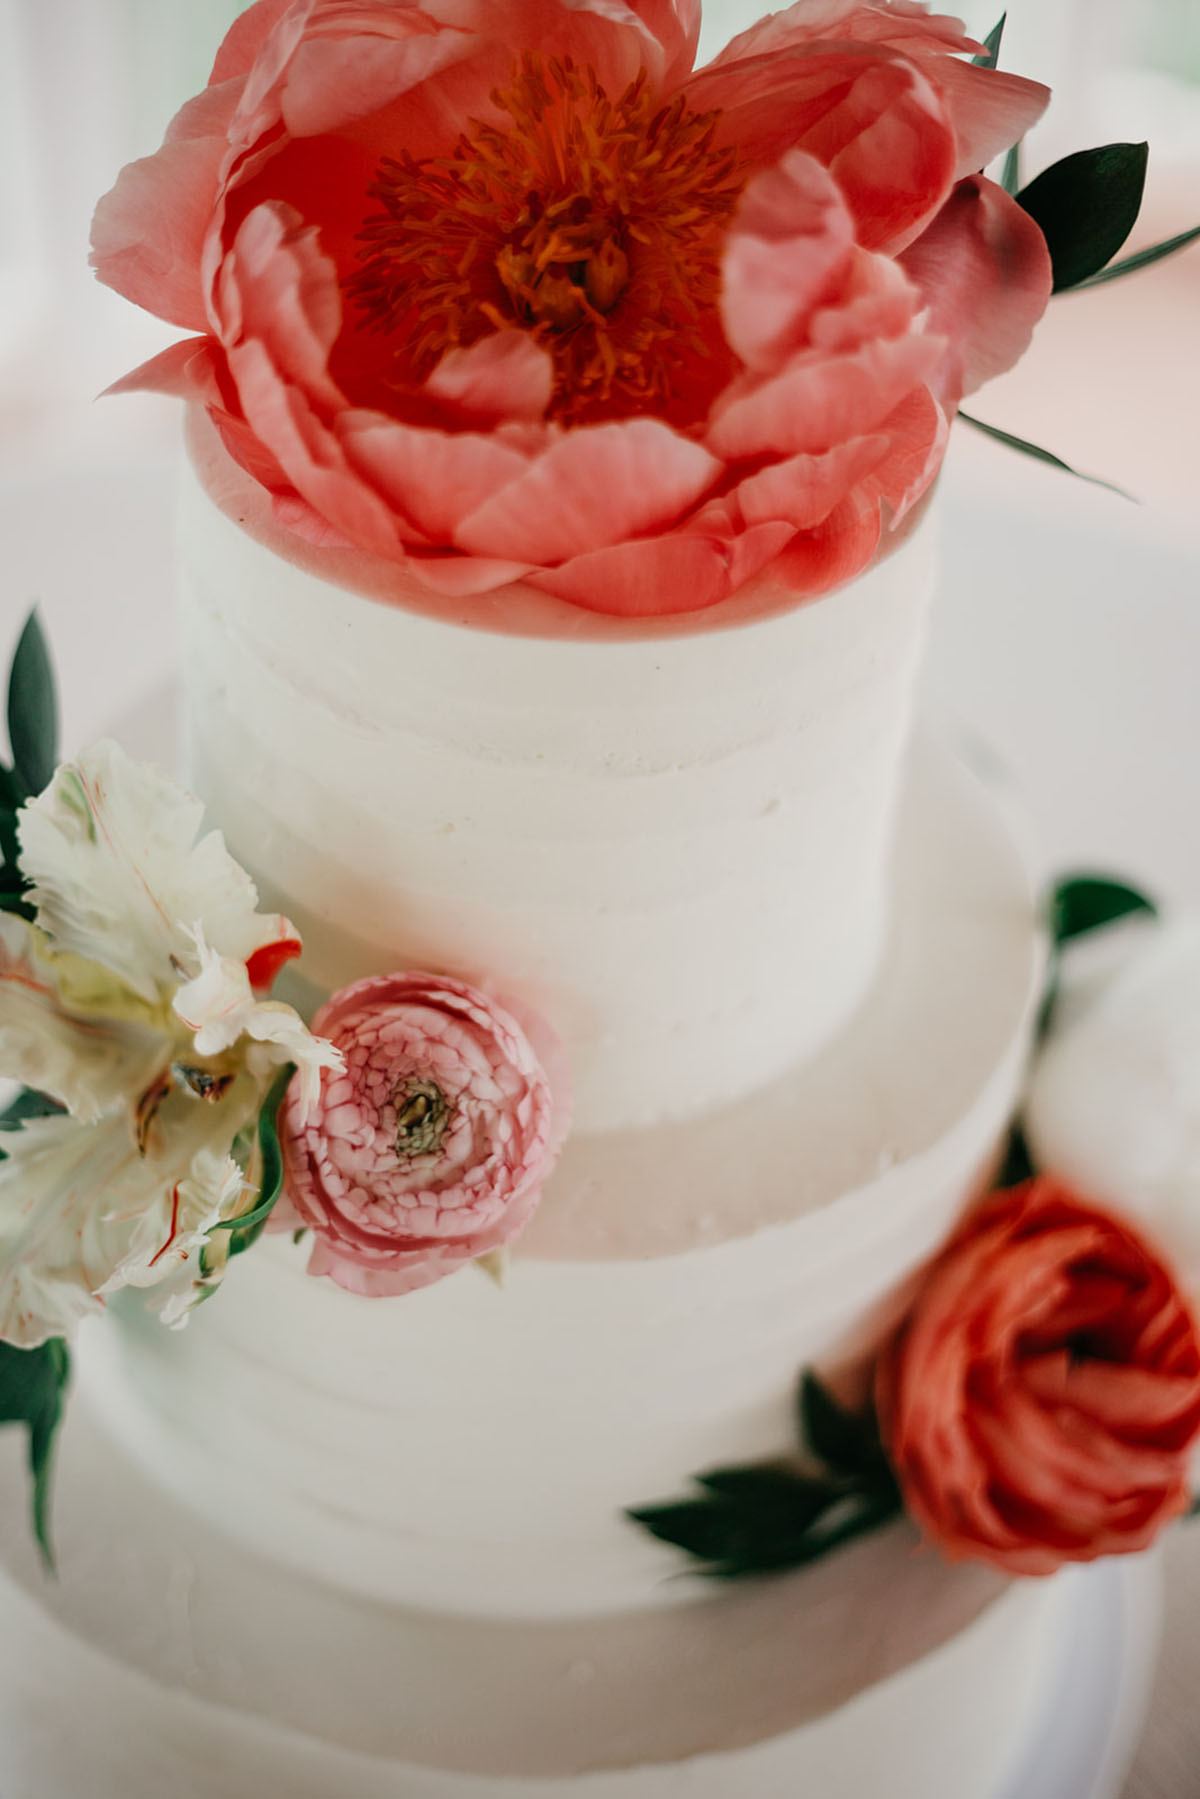 Vintage, romantic vineyard wedding two brides lesbian updos buns white dresses pearls red flower cake